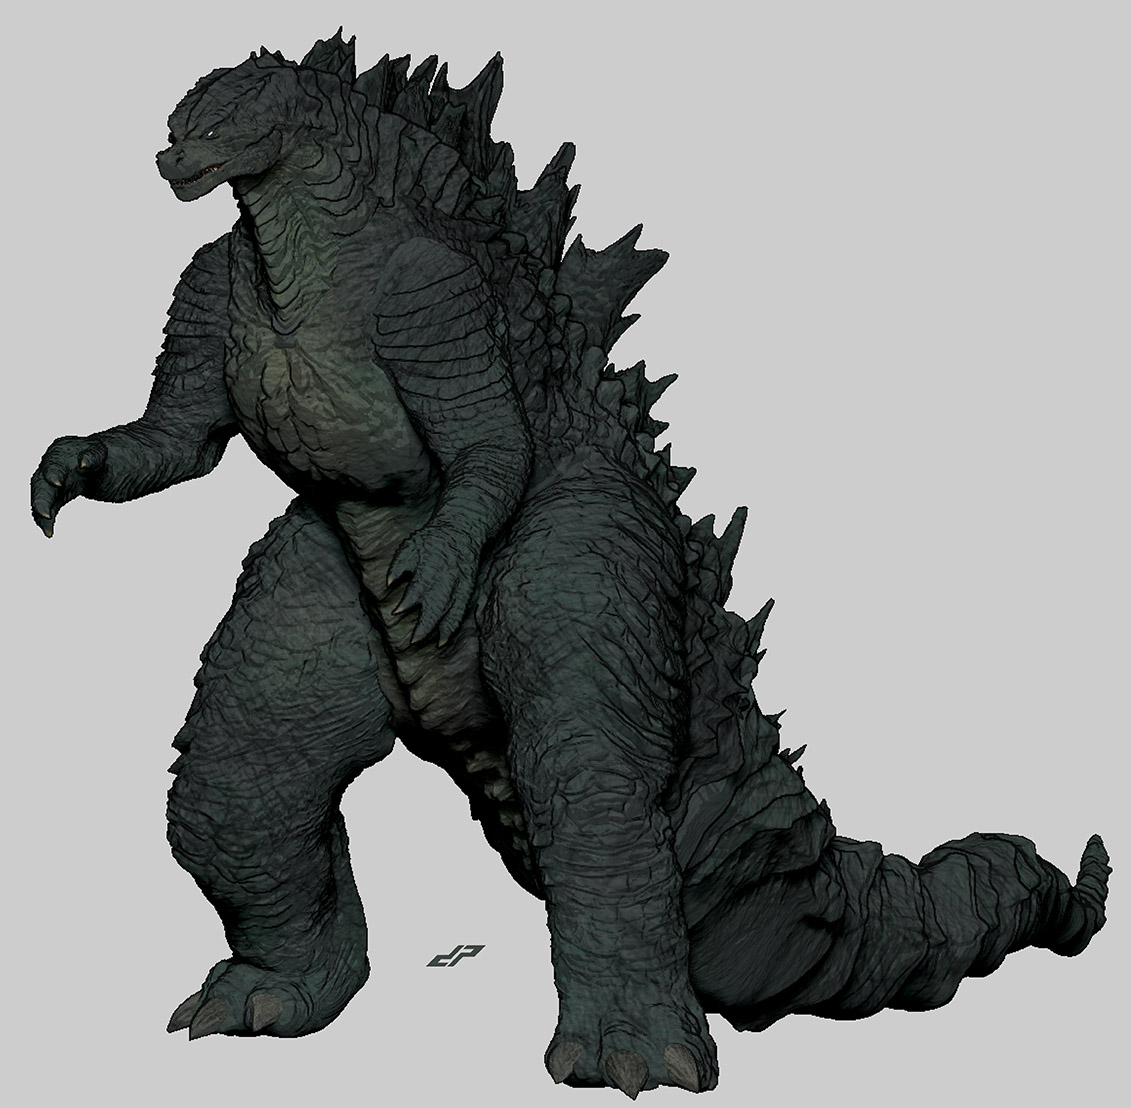 Godzilla_wip_3